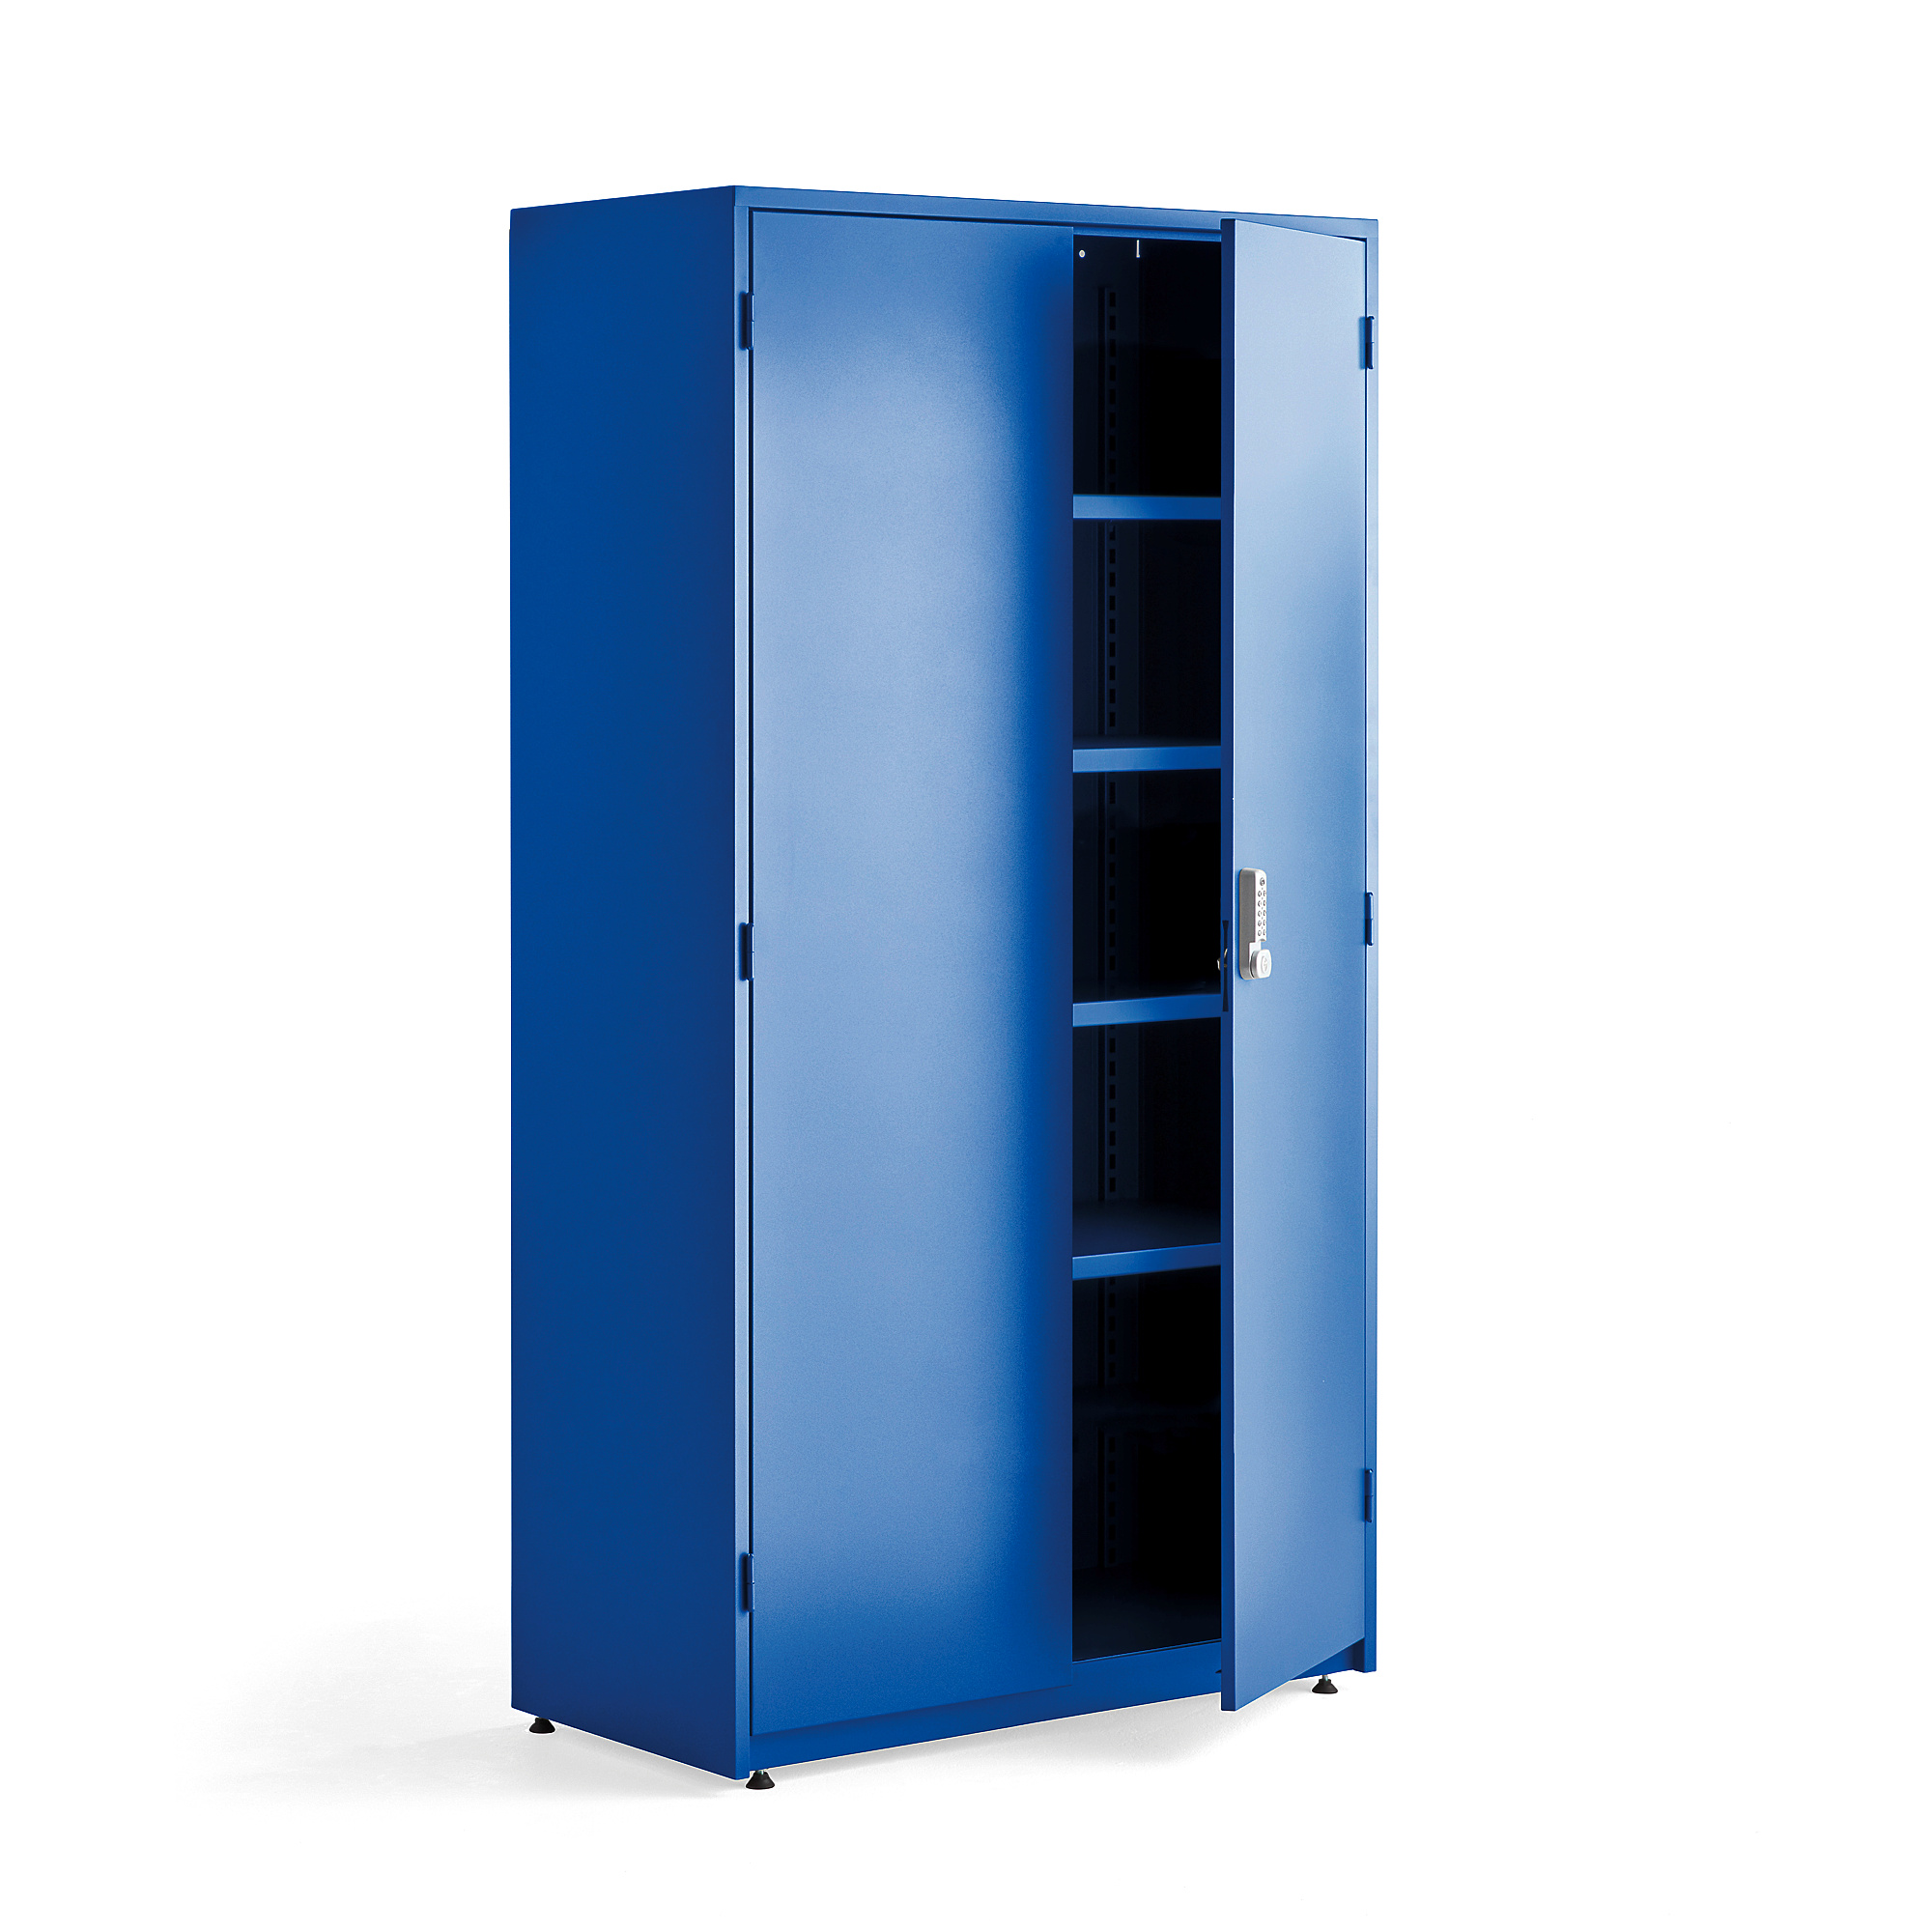 Dílenská skříň SUPPLY, elektronický zámek, 1900x1020x500 mm, modrá